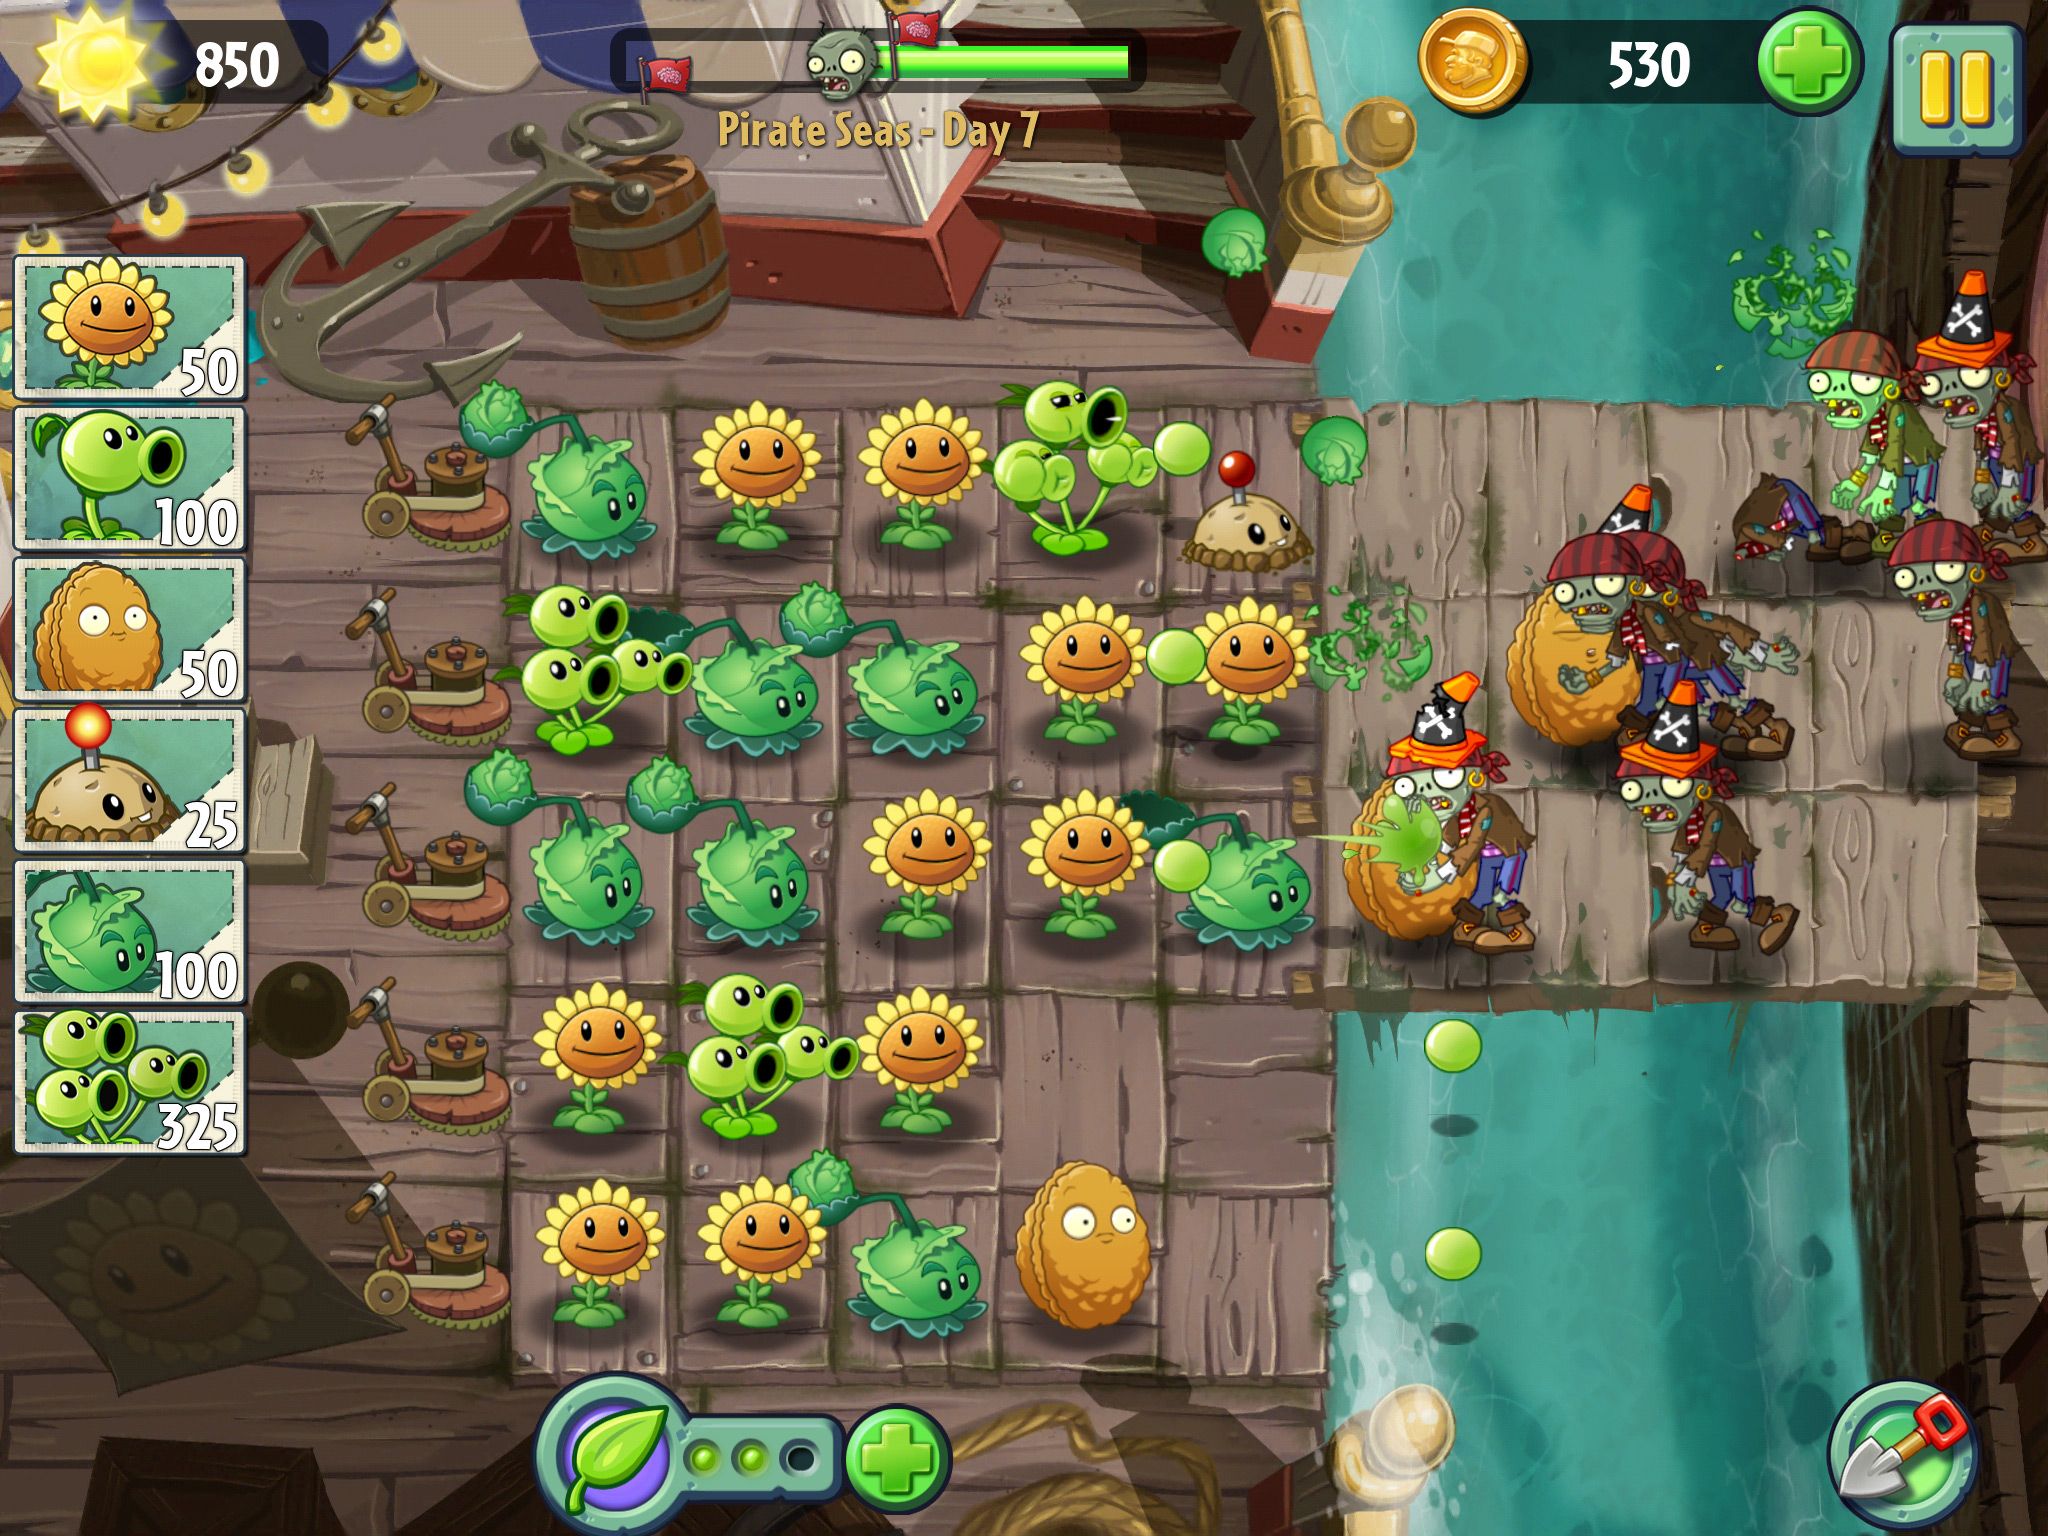 Plants vs. Zombies - Free Game Screenshots